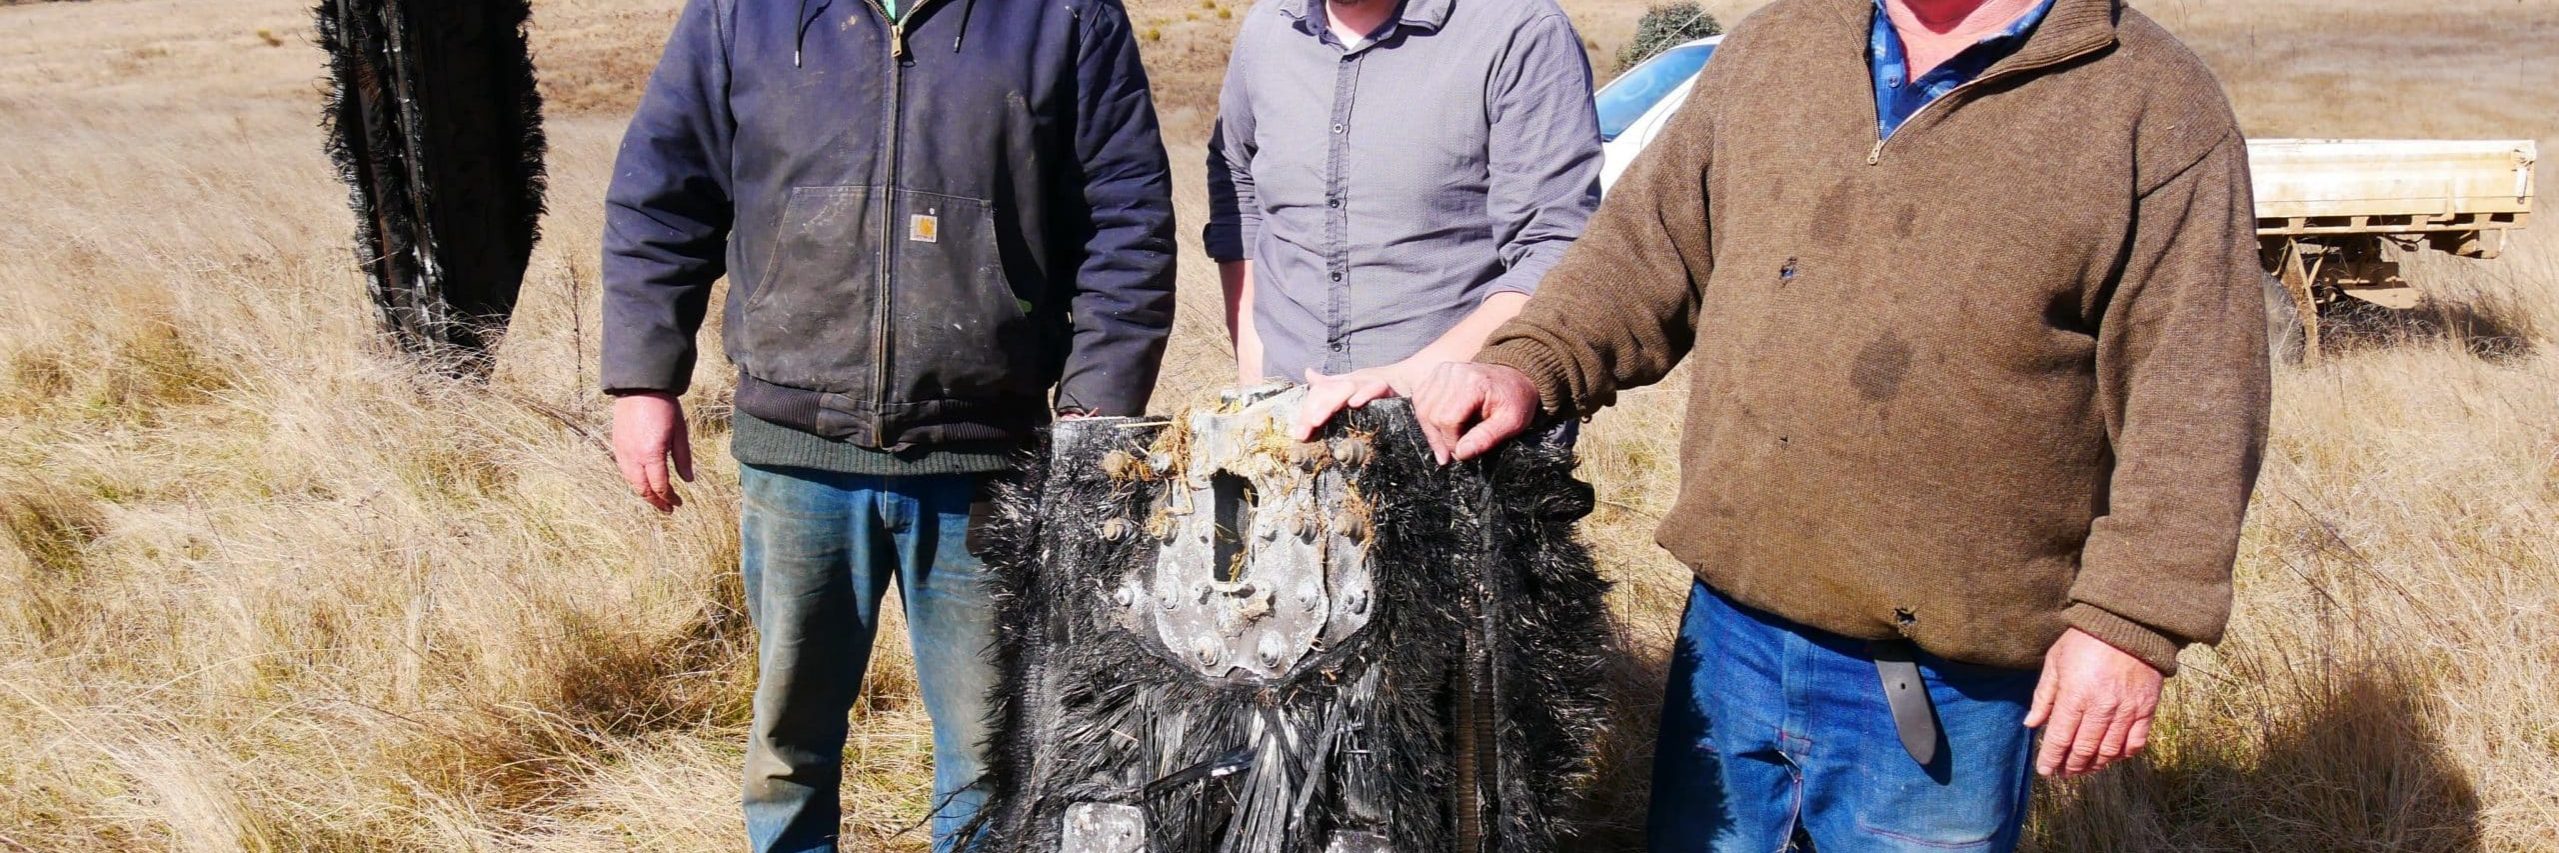 Space debris found in NSW